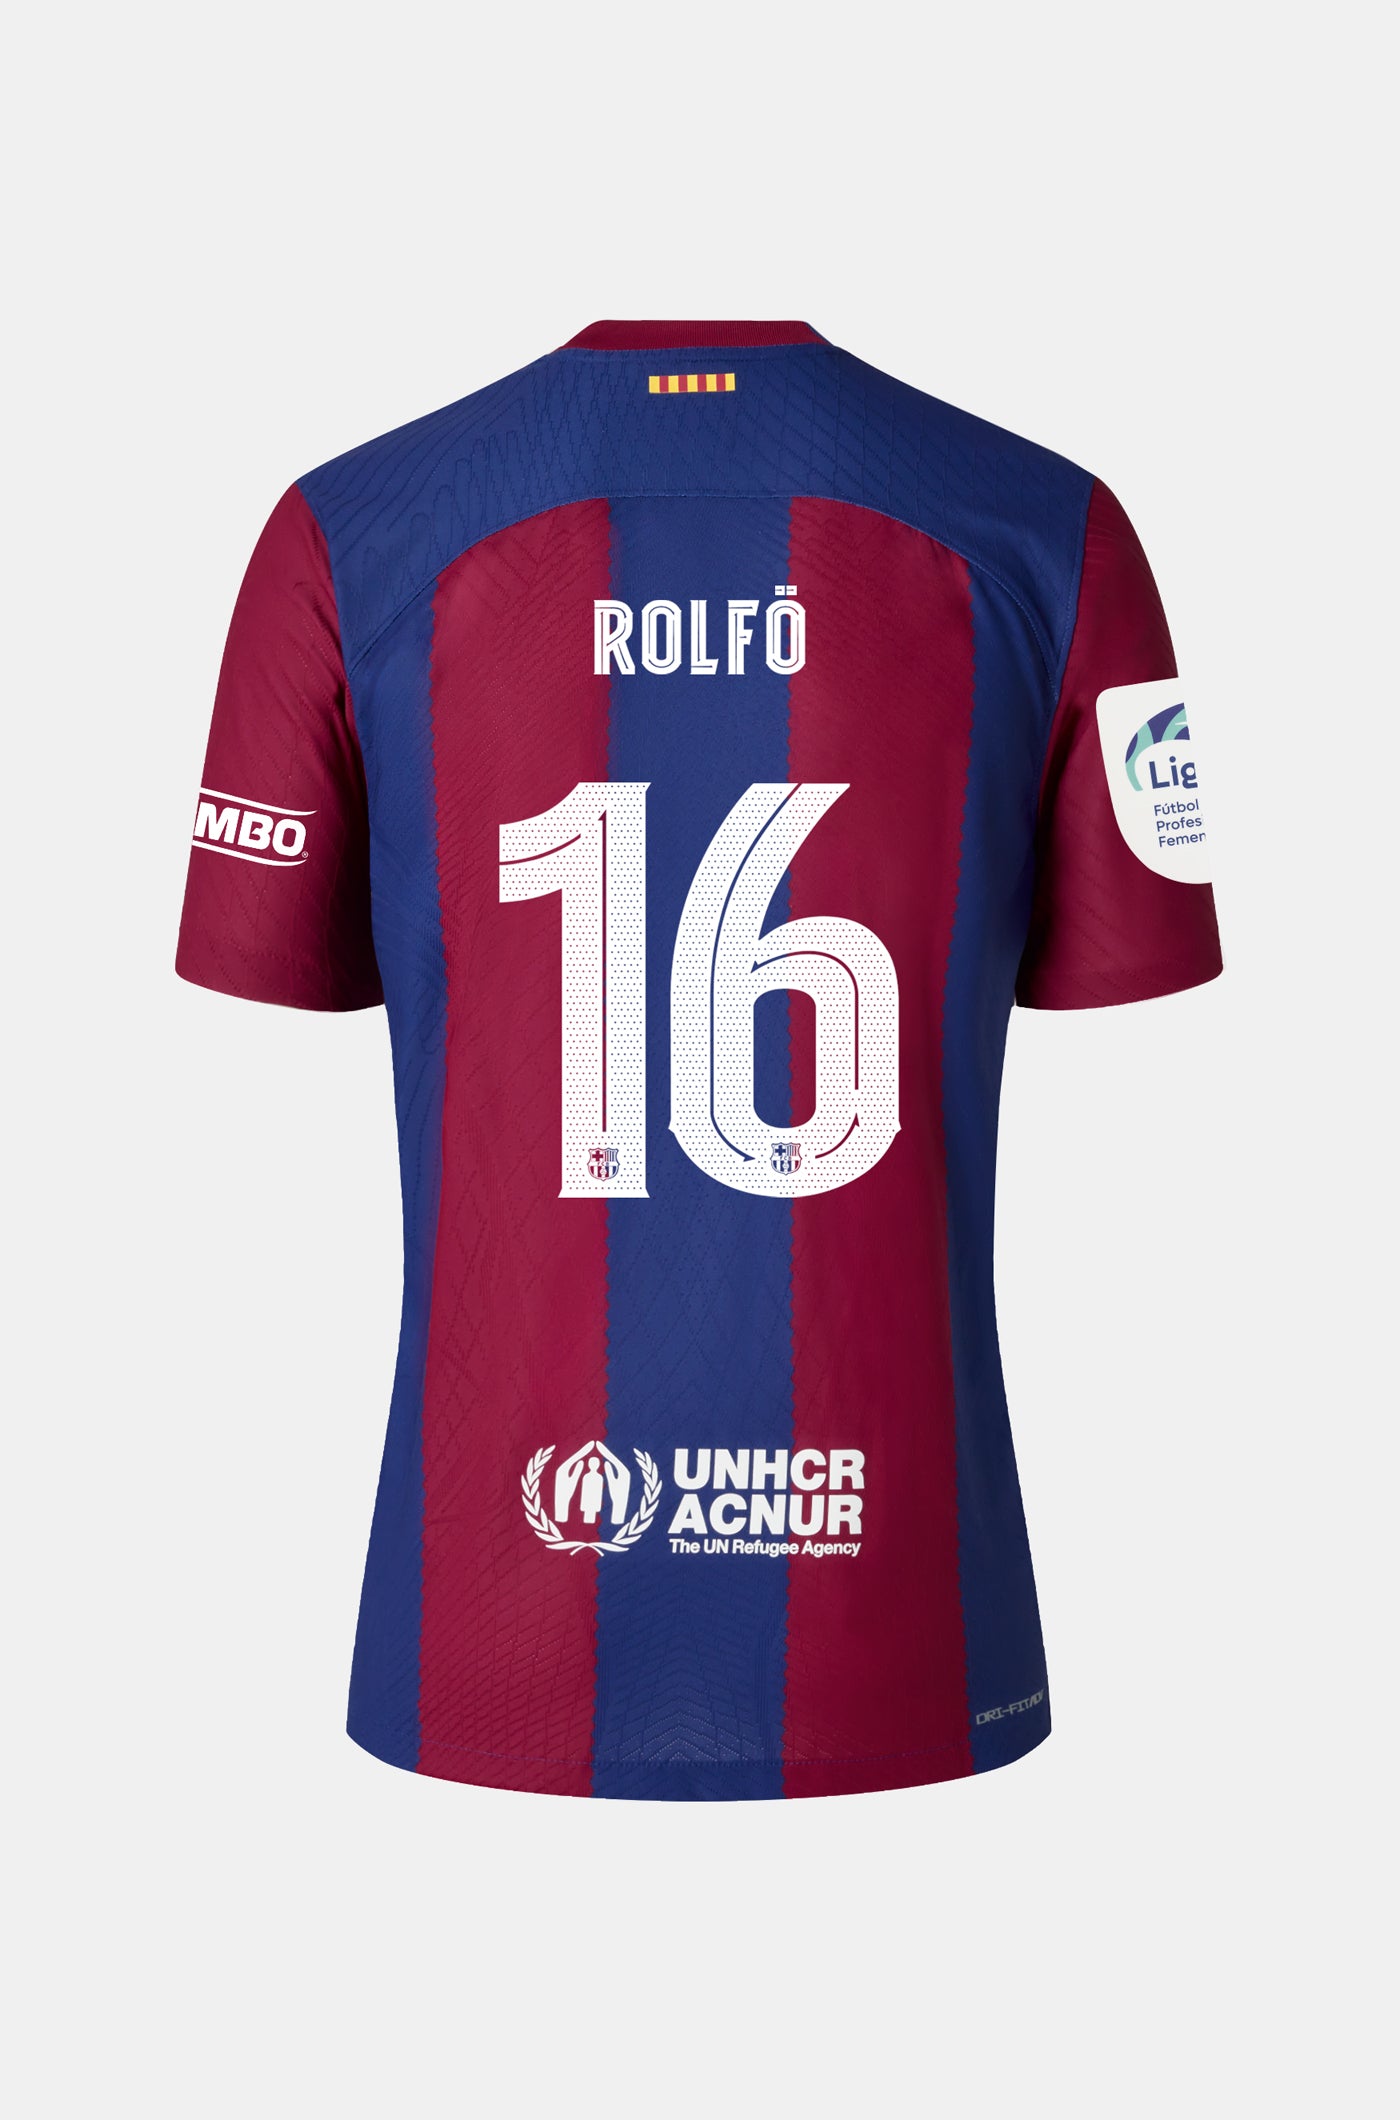 Liga F FC Barcelona home shirt 23/24 Player's Edition - ROLFÖ